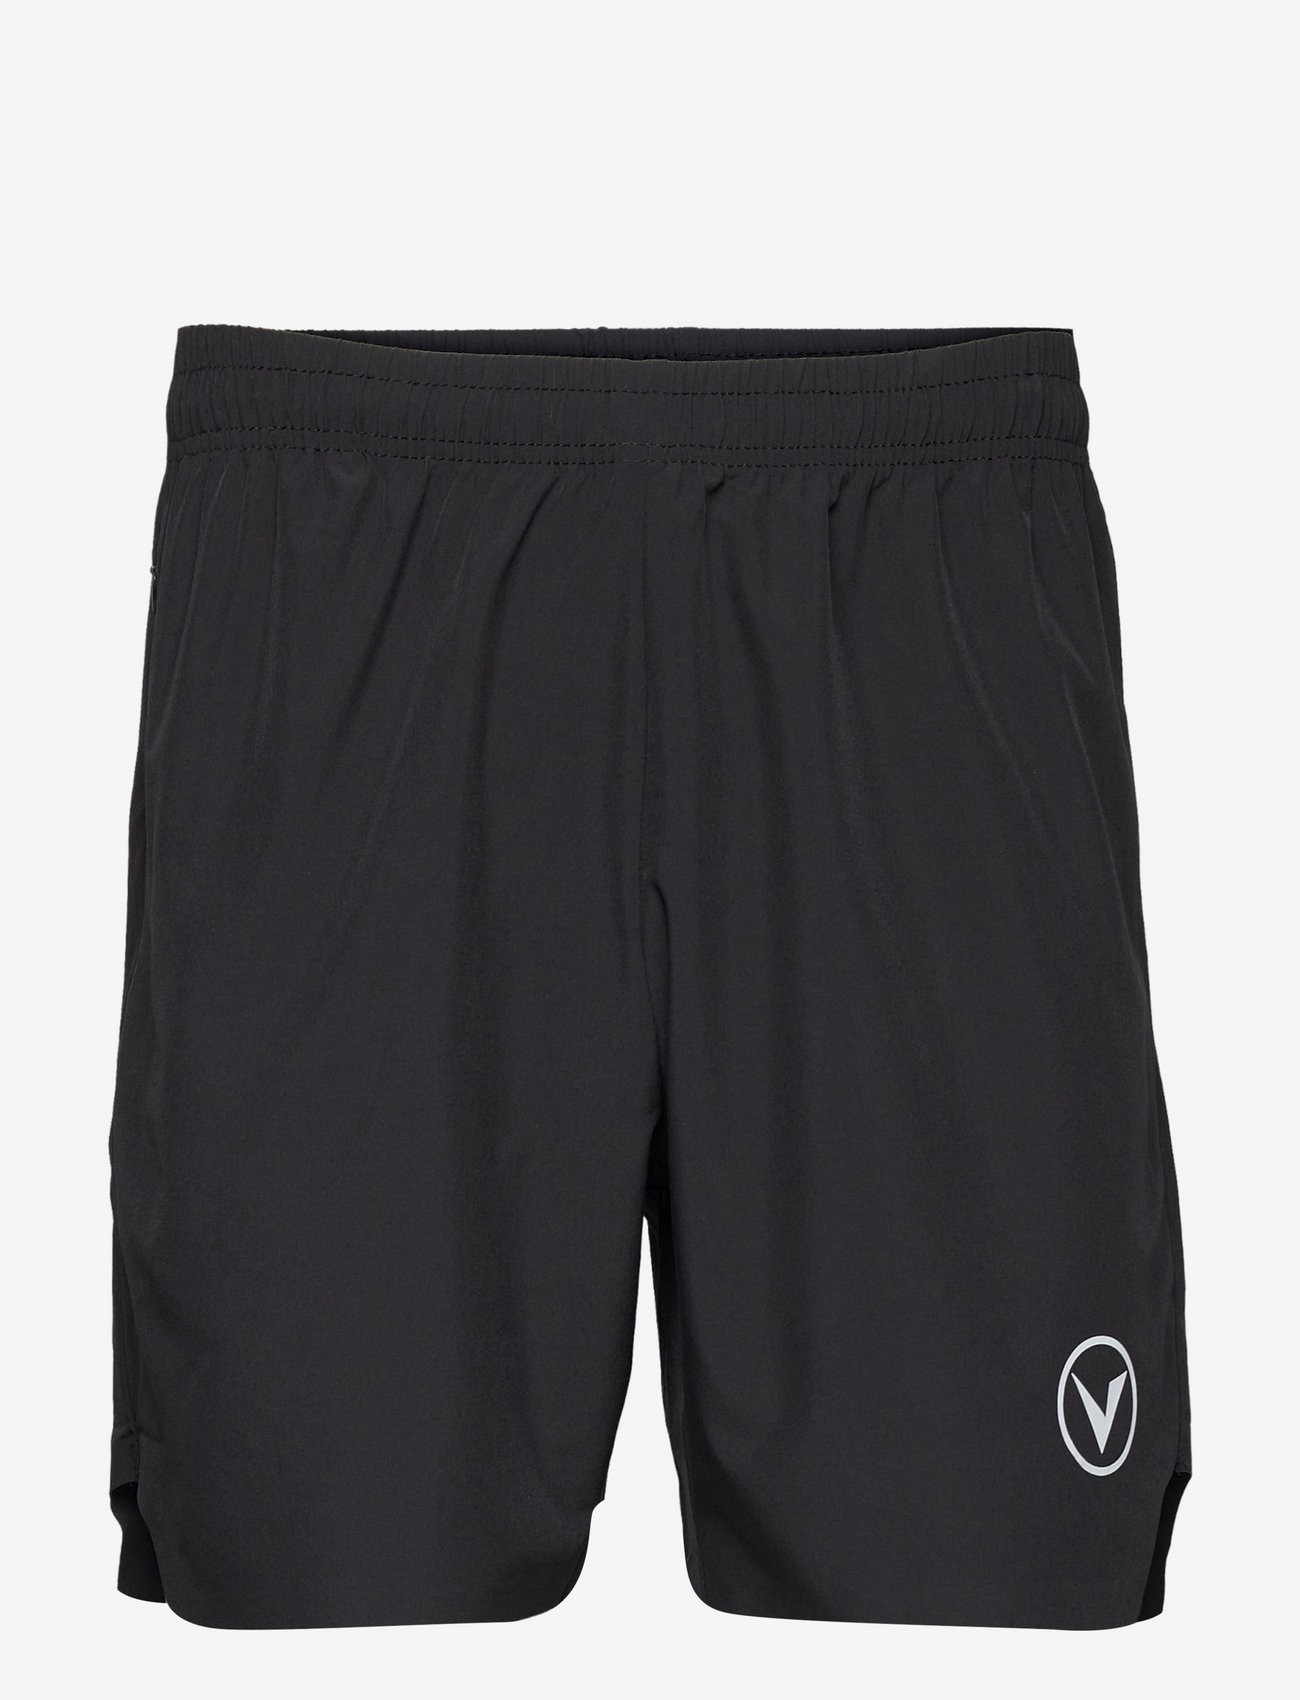 Virtus - Spier M Shorts - trainingshorts - black - 0